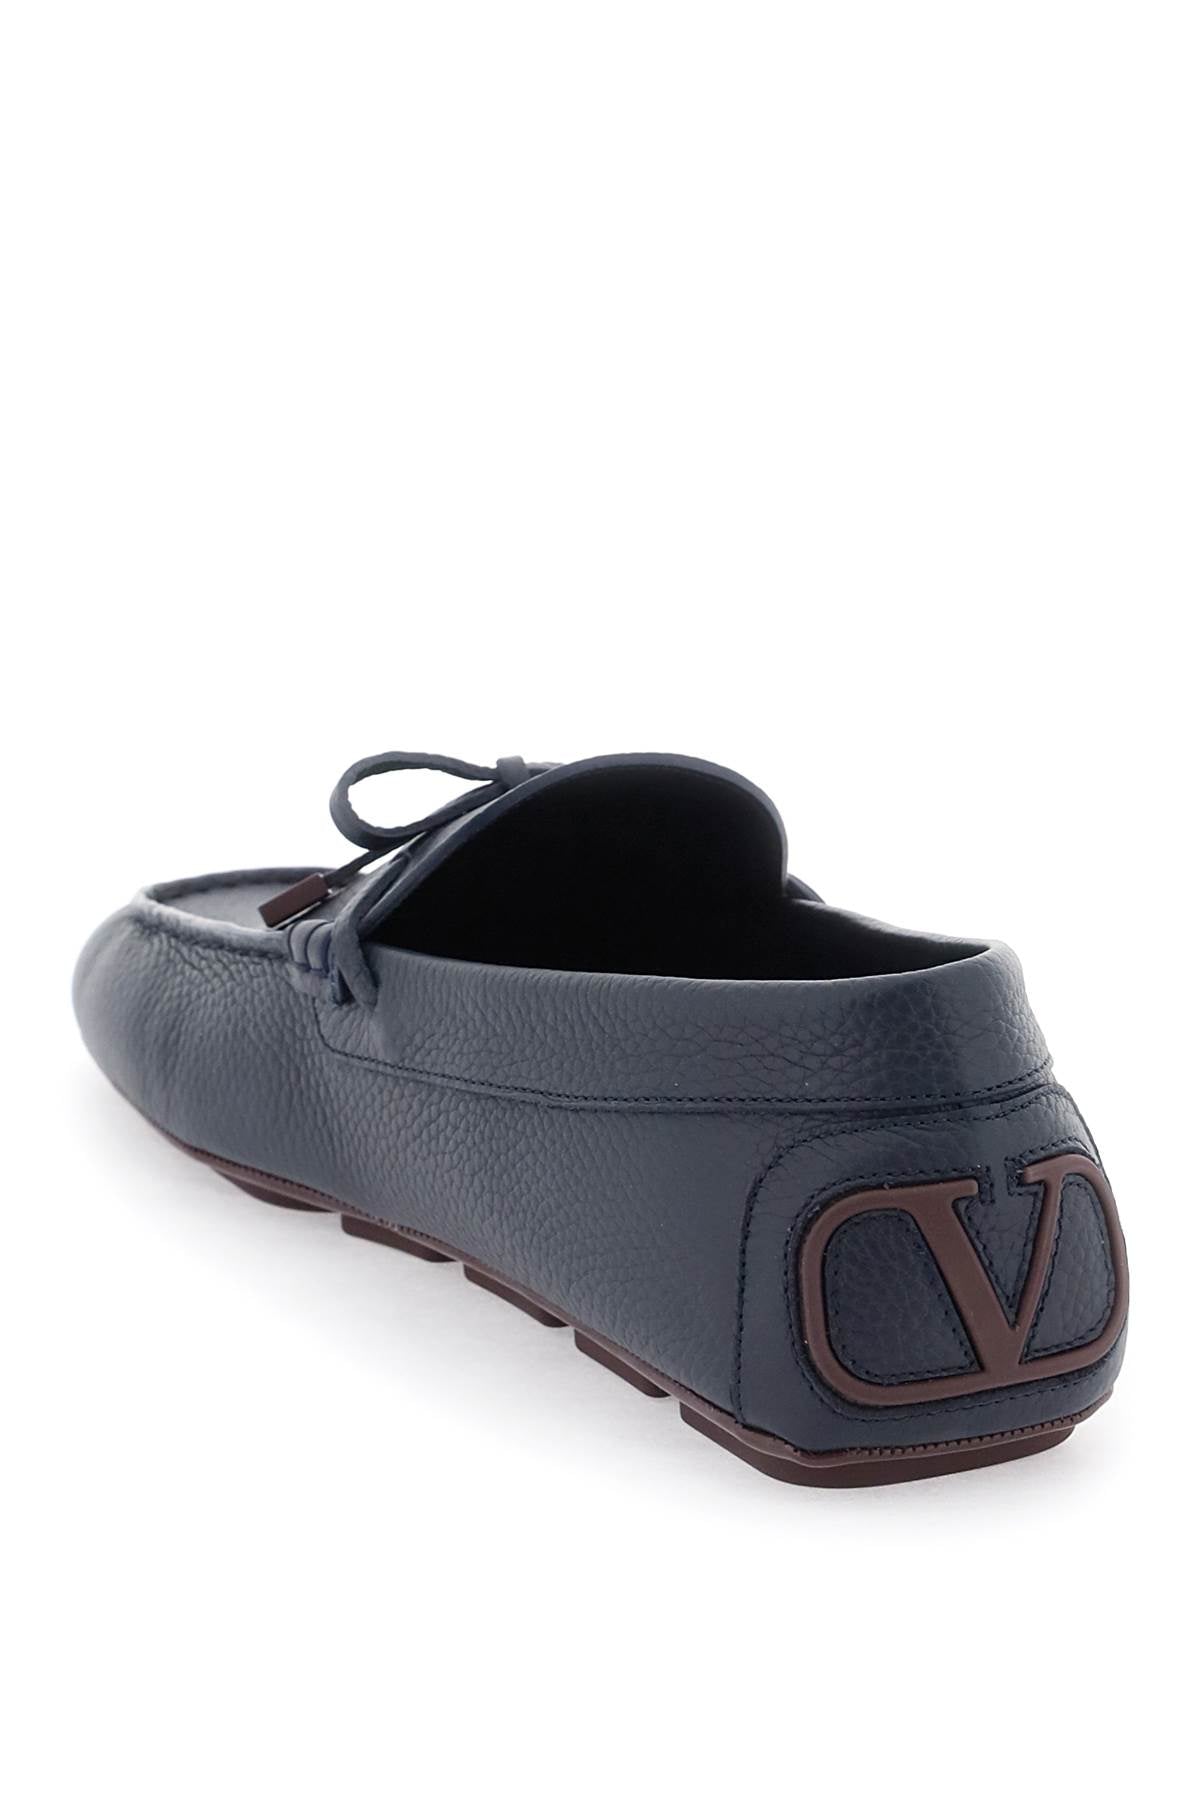 Valentino GARAVANI Valentino garavani leather loafers with bow